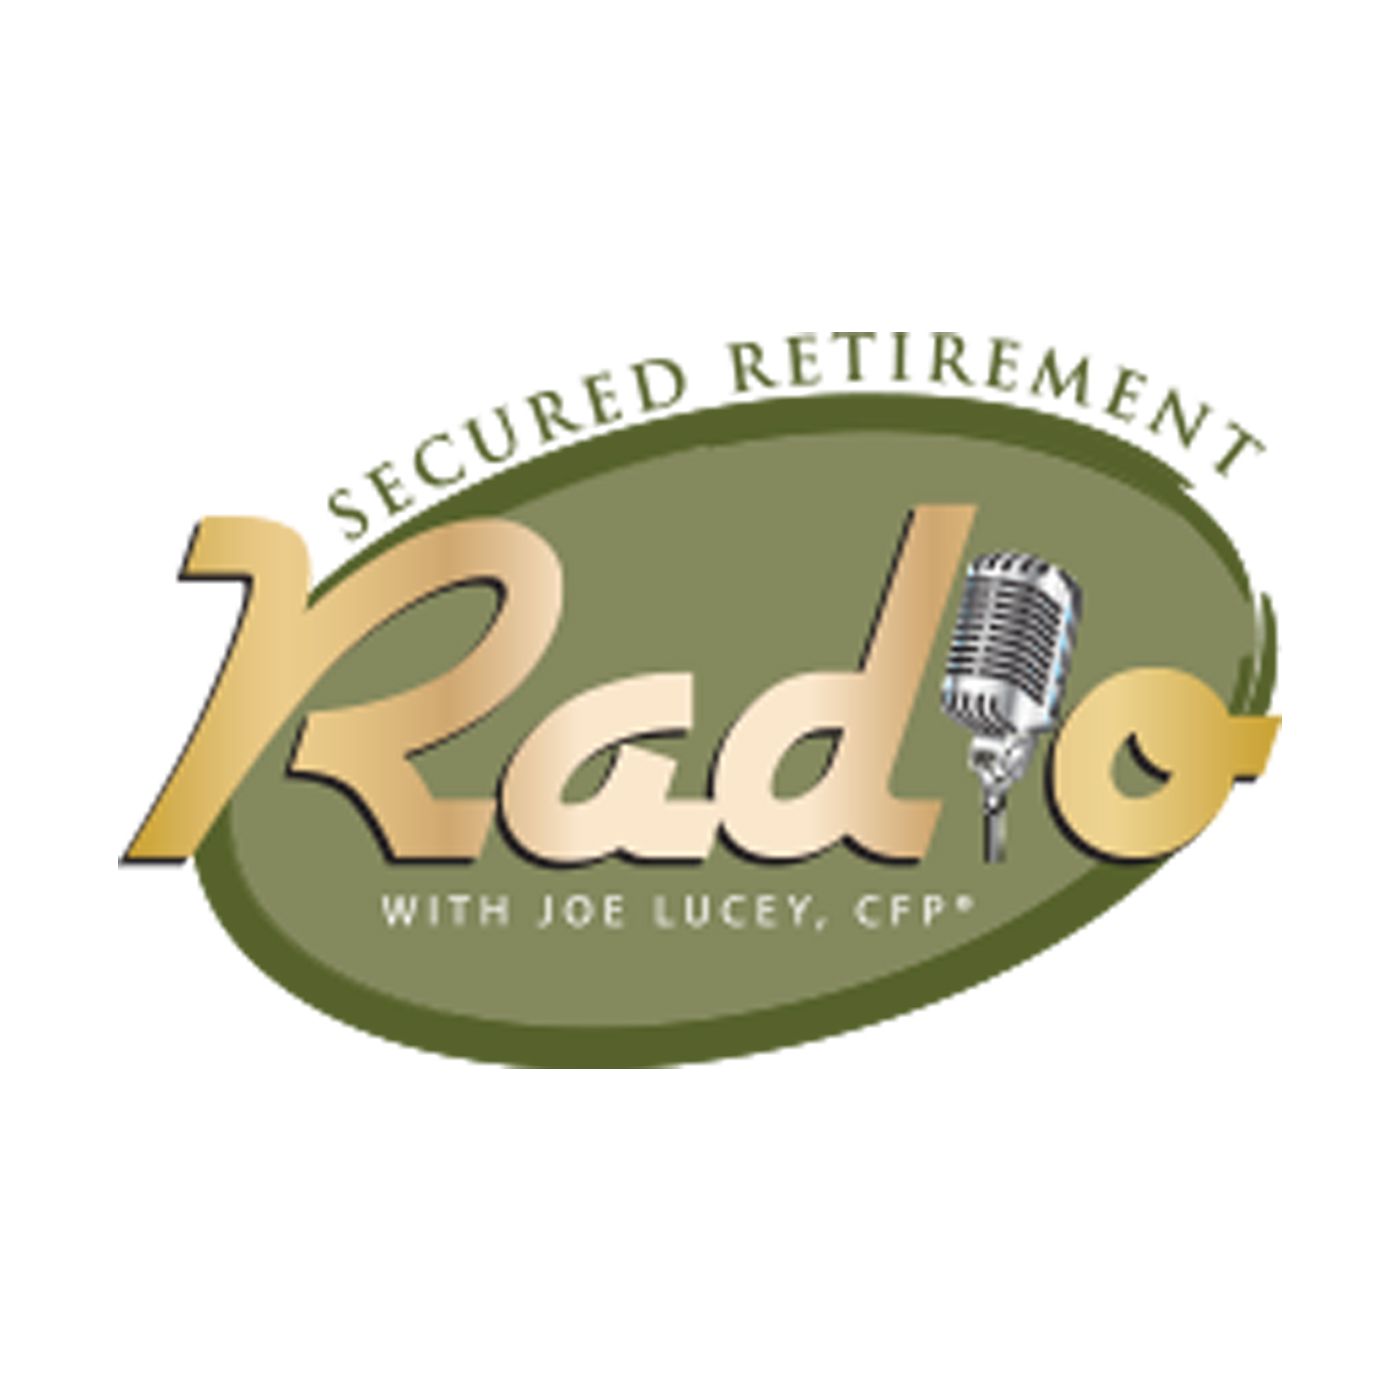 Secured Retirement Radio